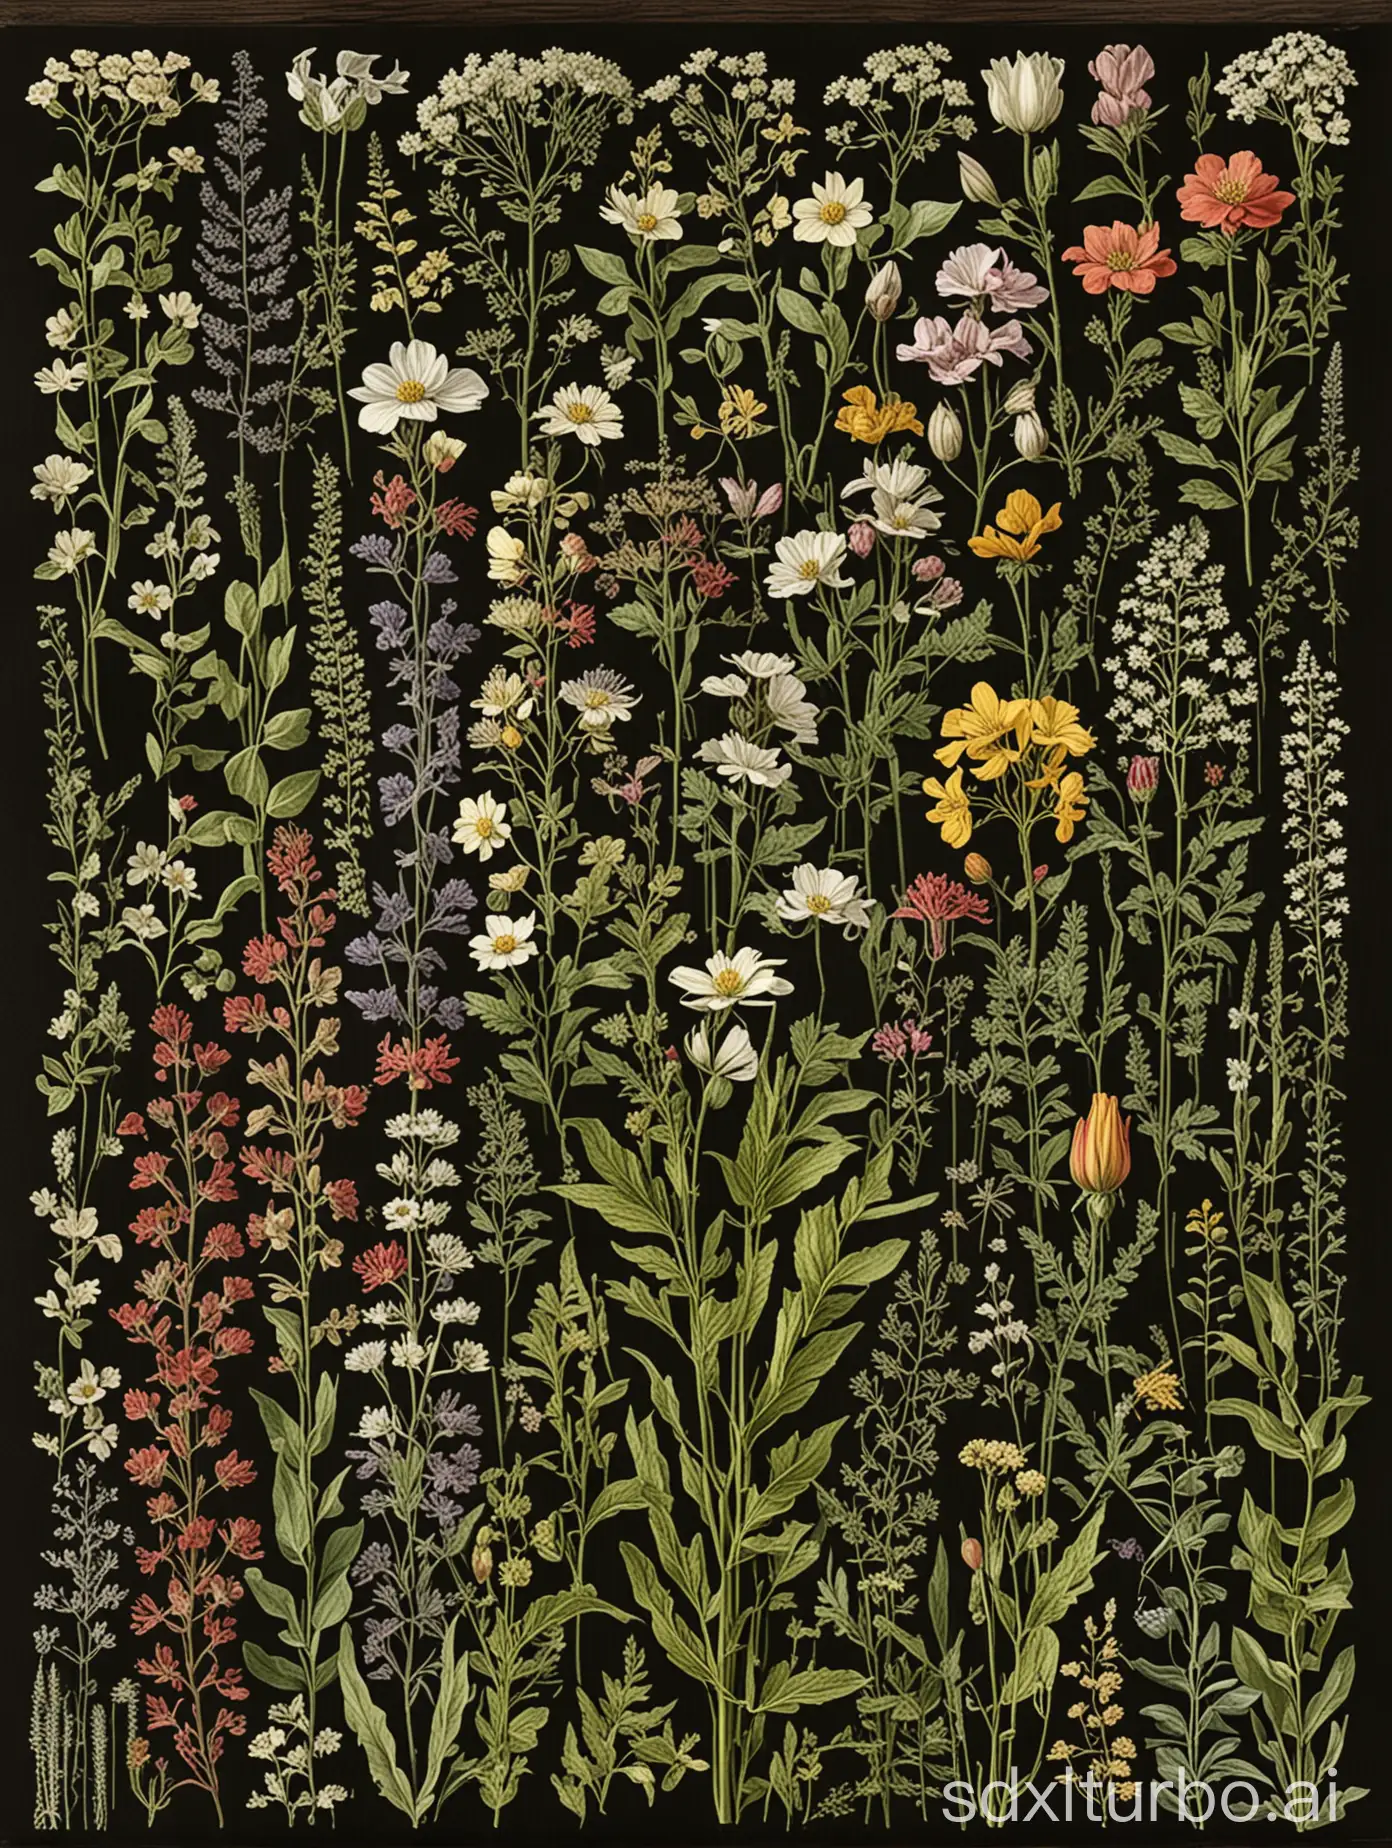 Botanical herbarium poster of wildflowers, hyper detailed